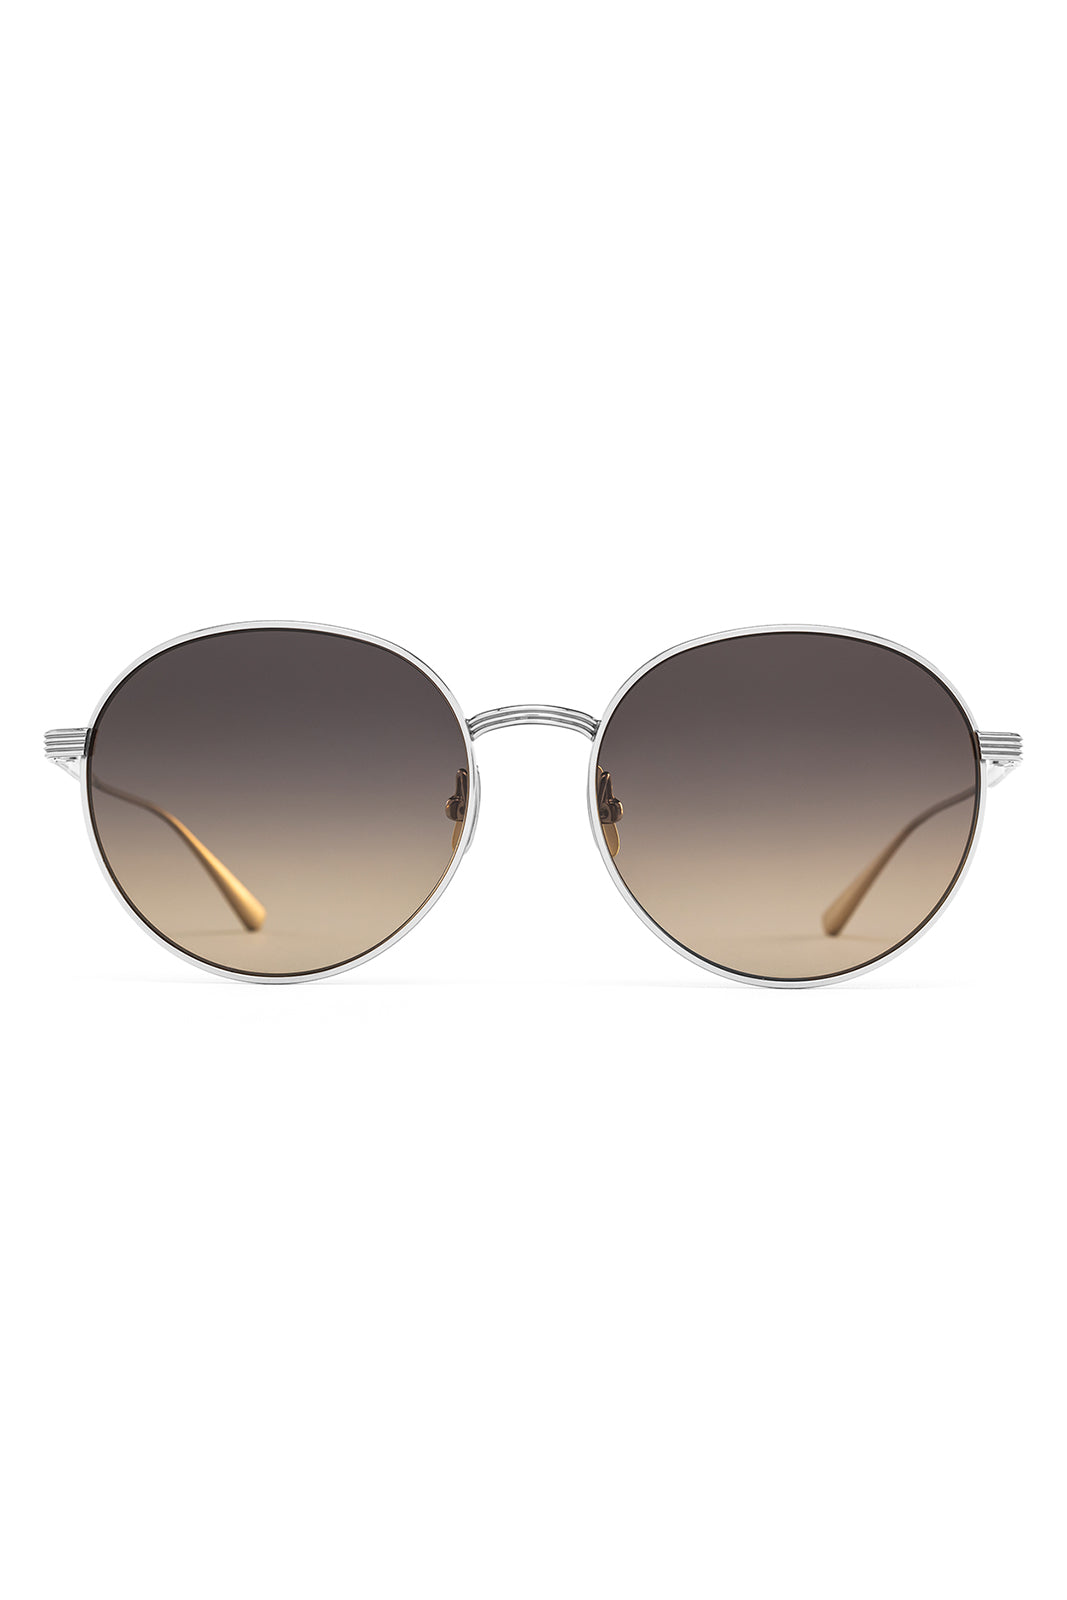 salt-trois-amarees-eclusive-traditional-silver-sunglasses